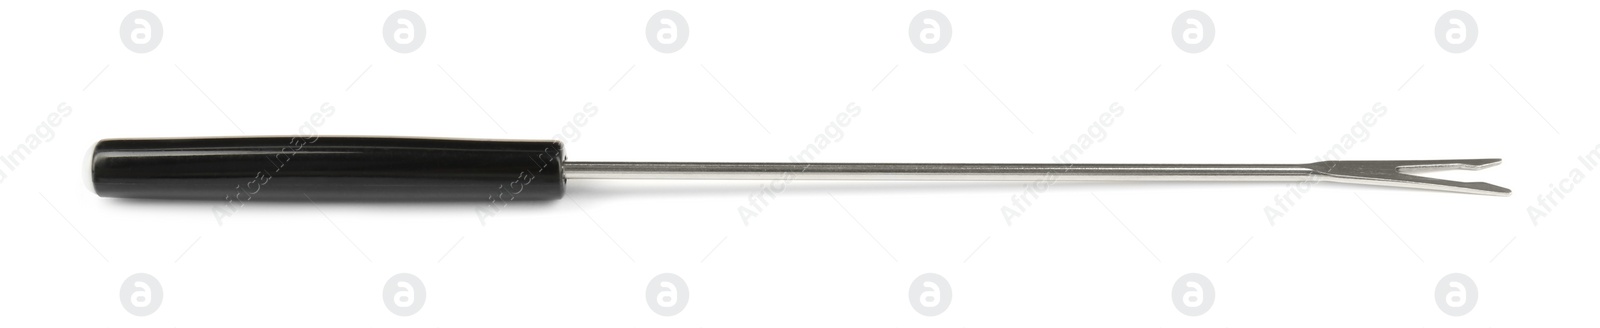 Photo of Fondue fork isolated on white. Kitchen equipment